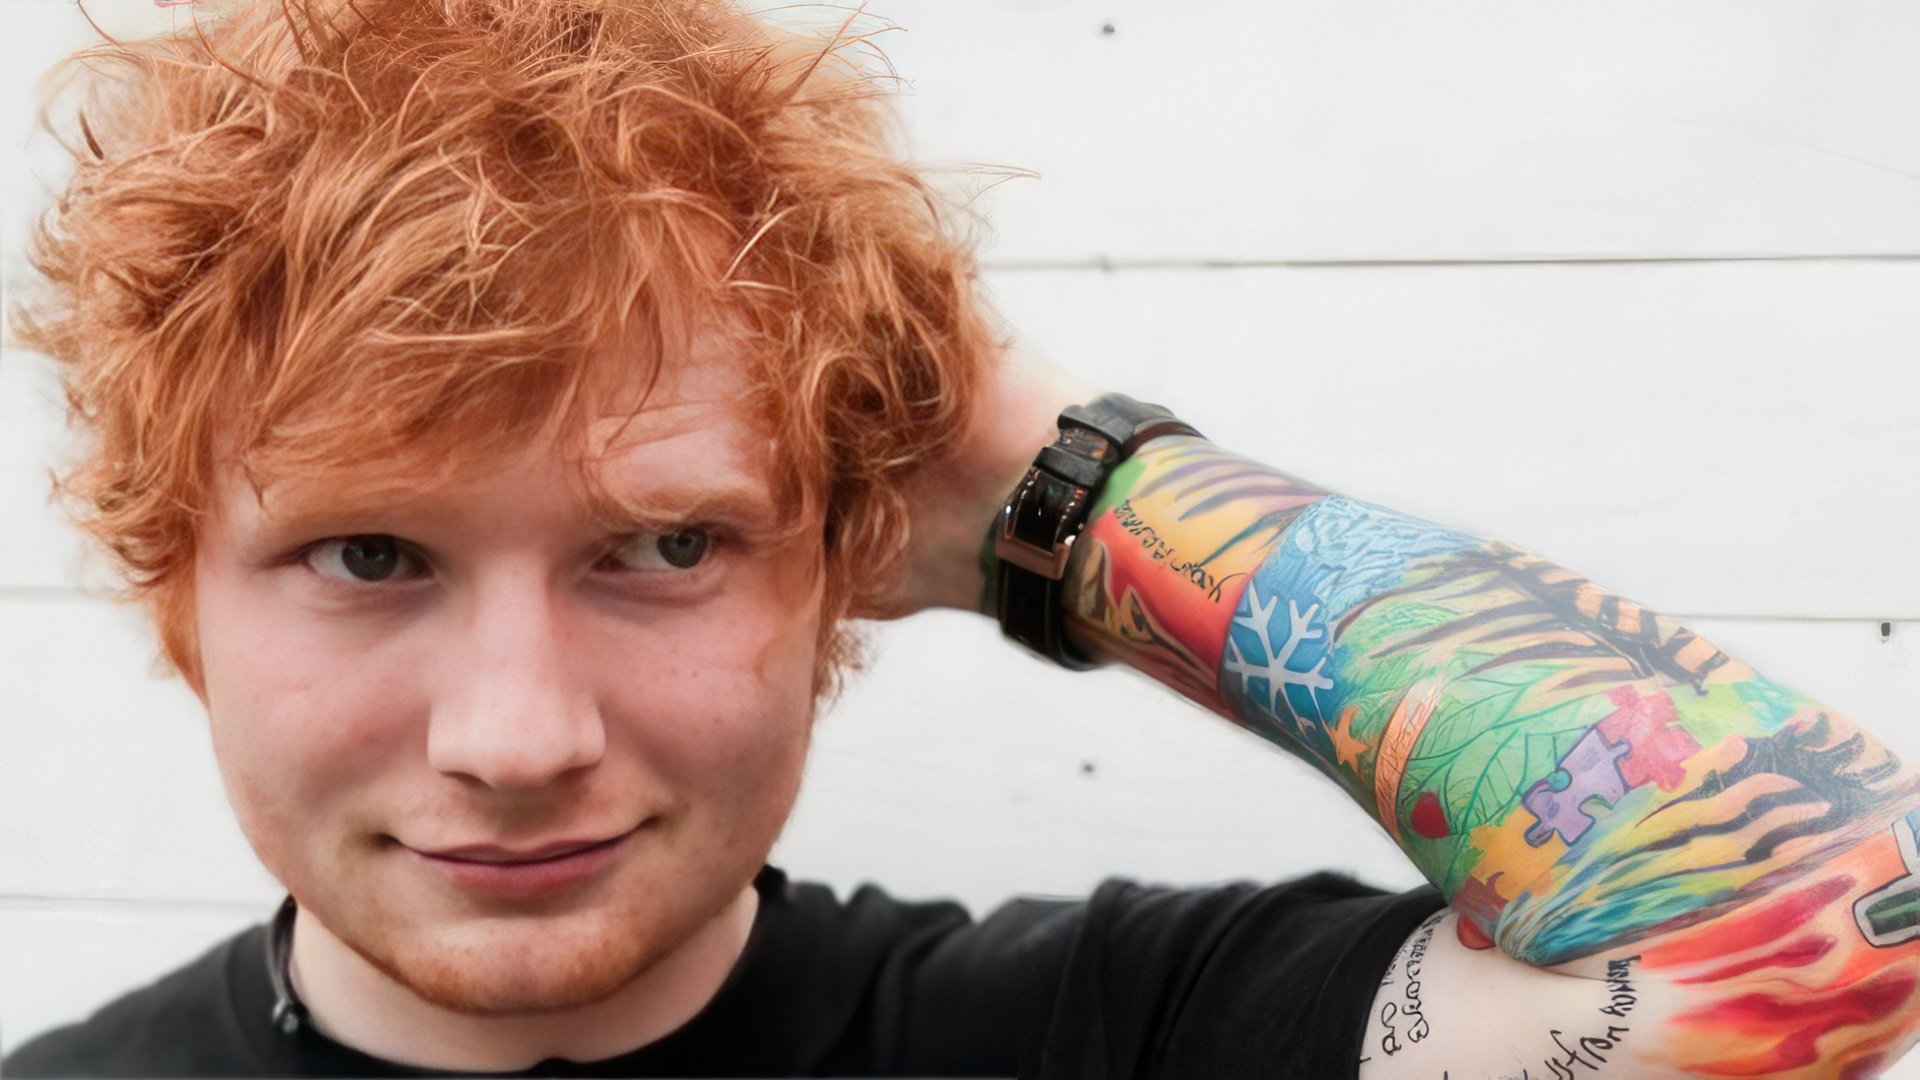 British Musician Ed Sheeran